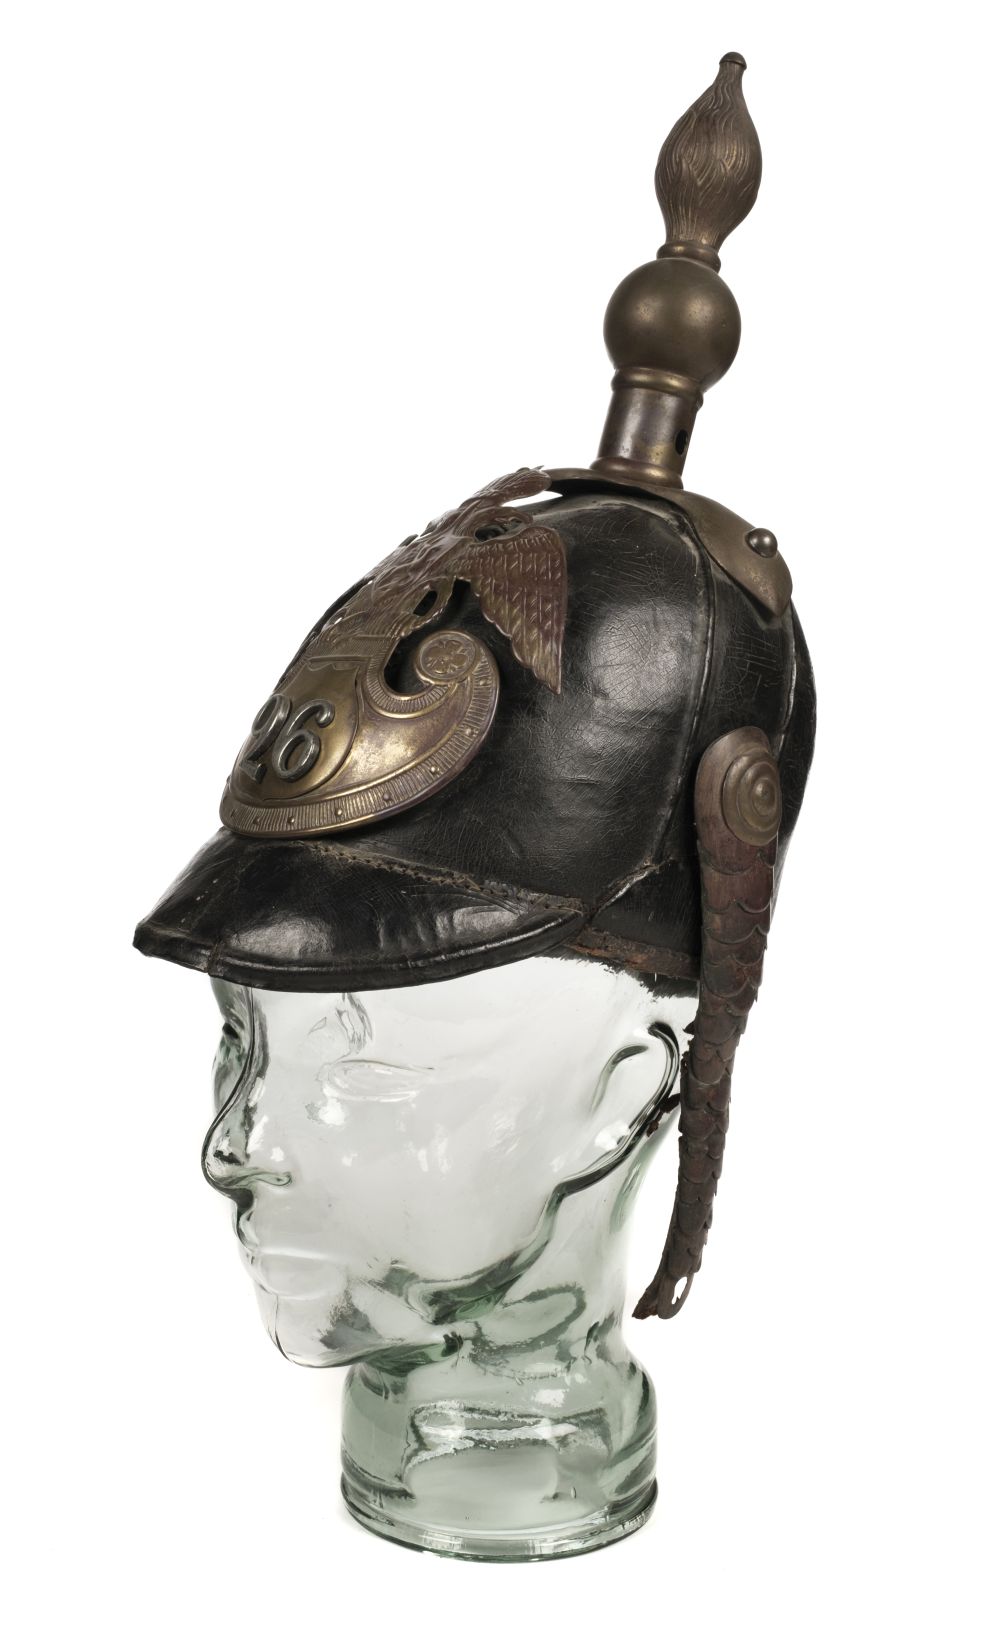 * Helmet. Russian Model 1844 style Helmet